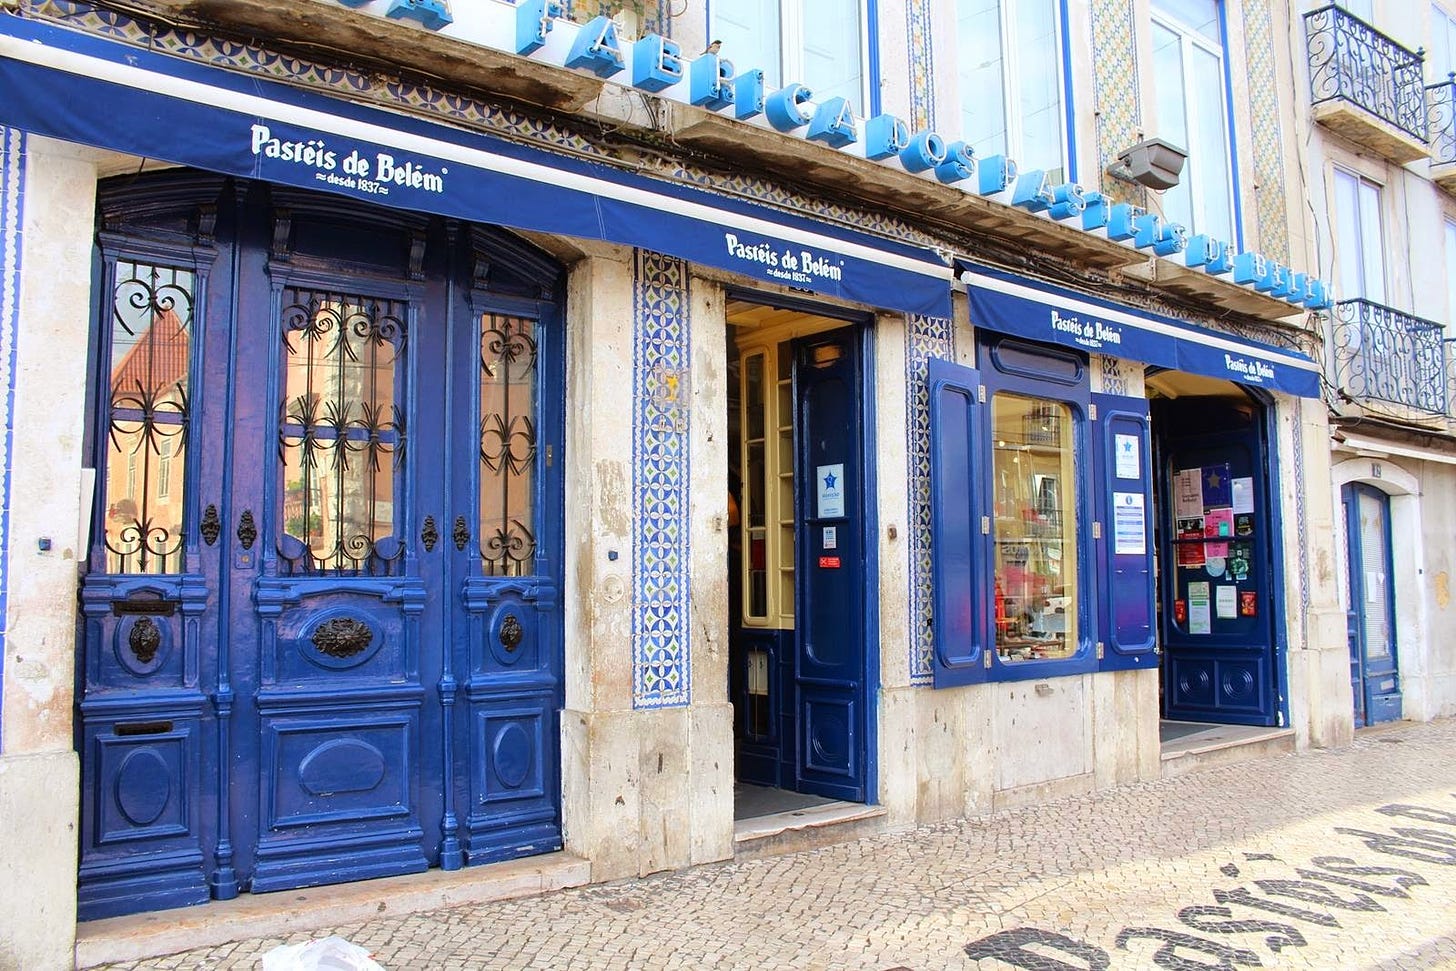 Pasteis de Belem store - Lisbon